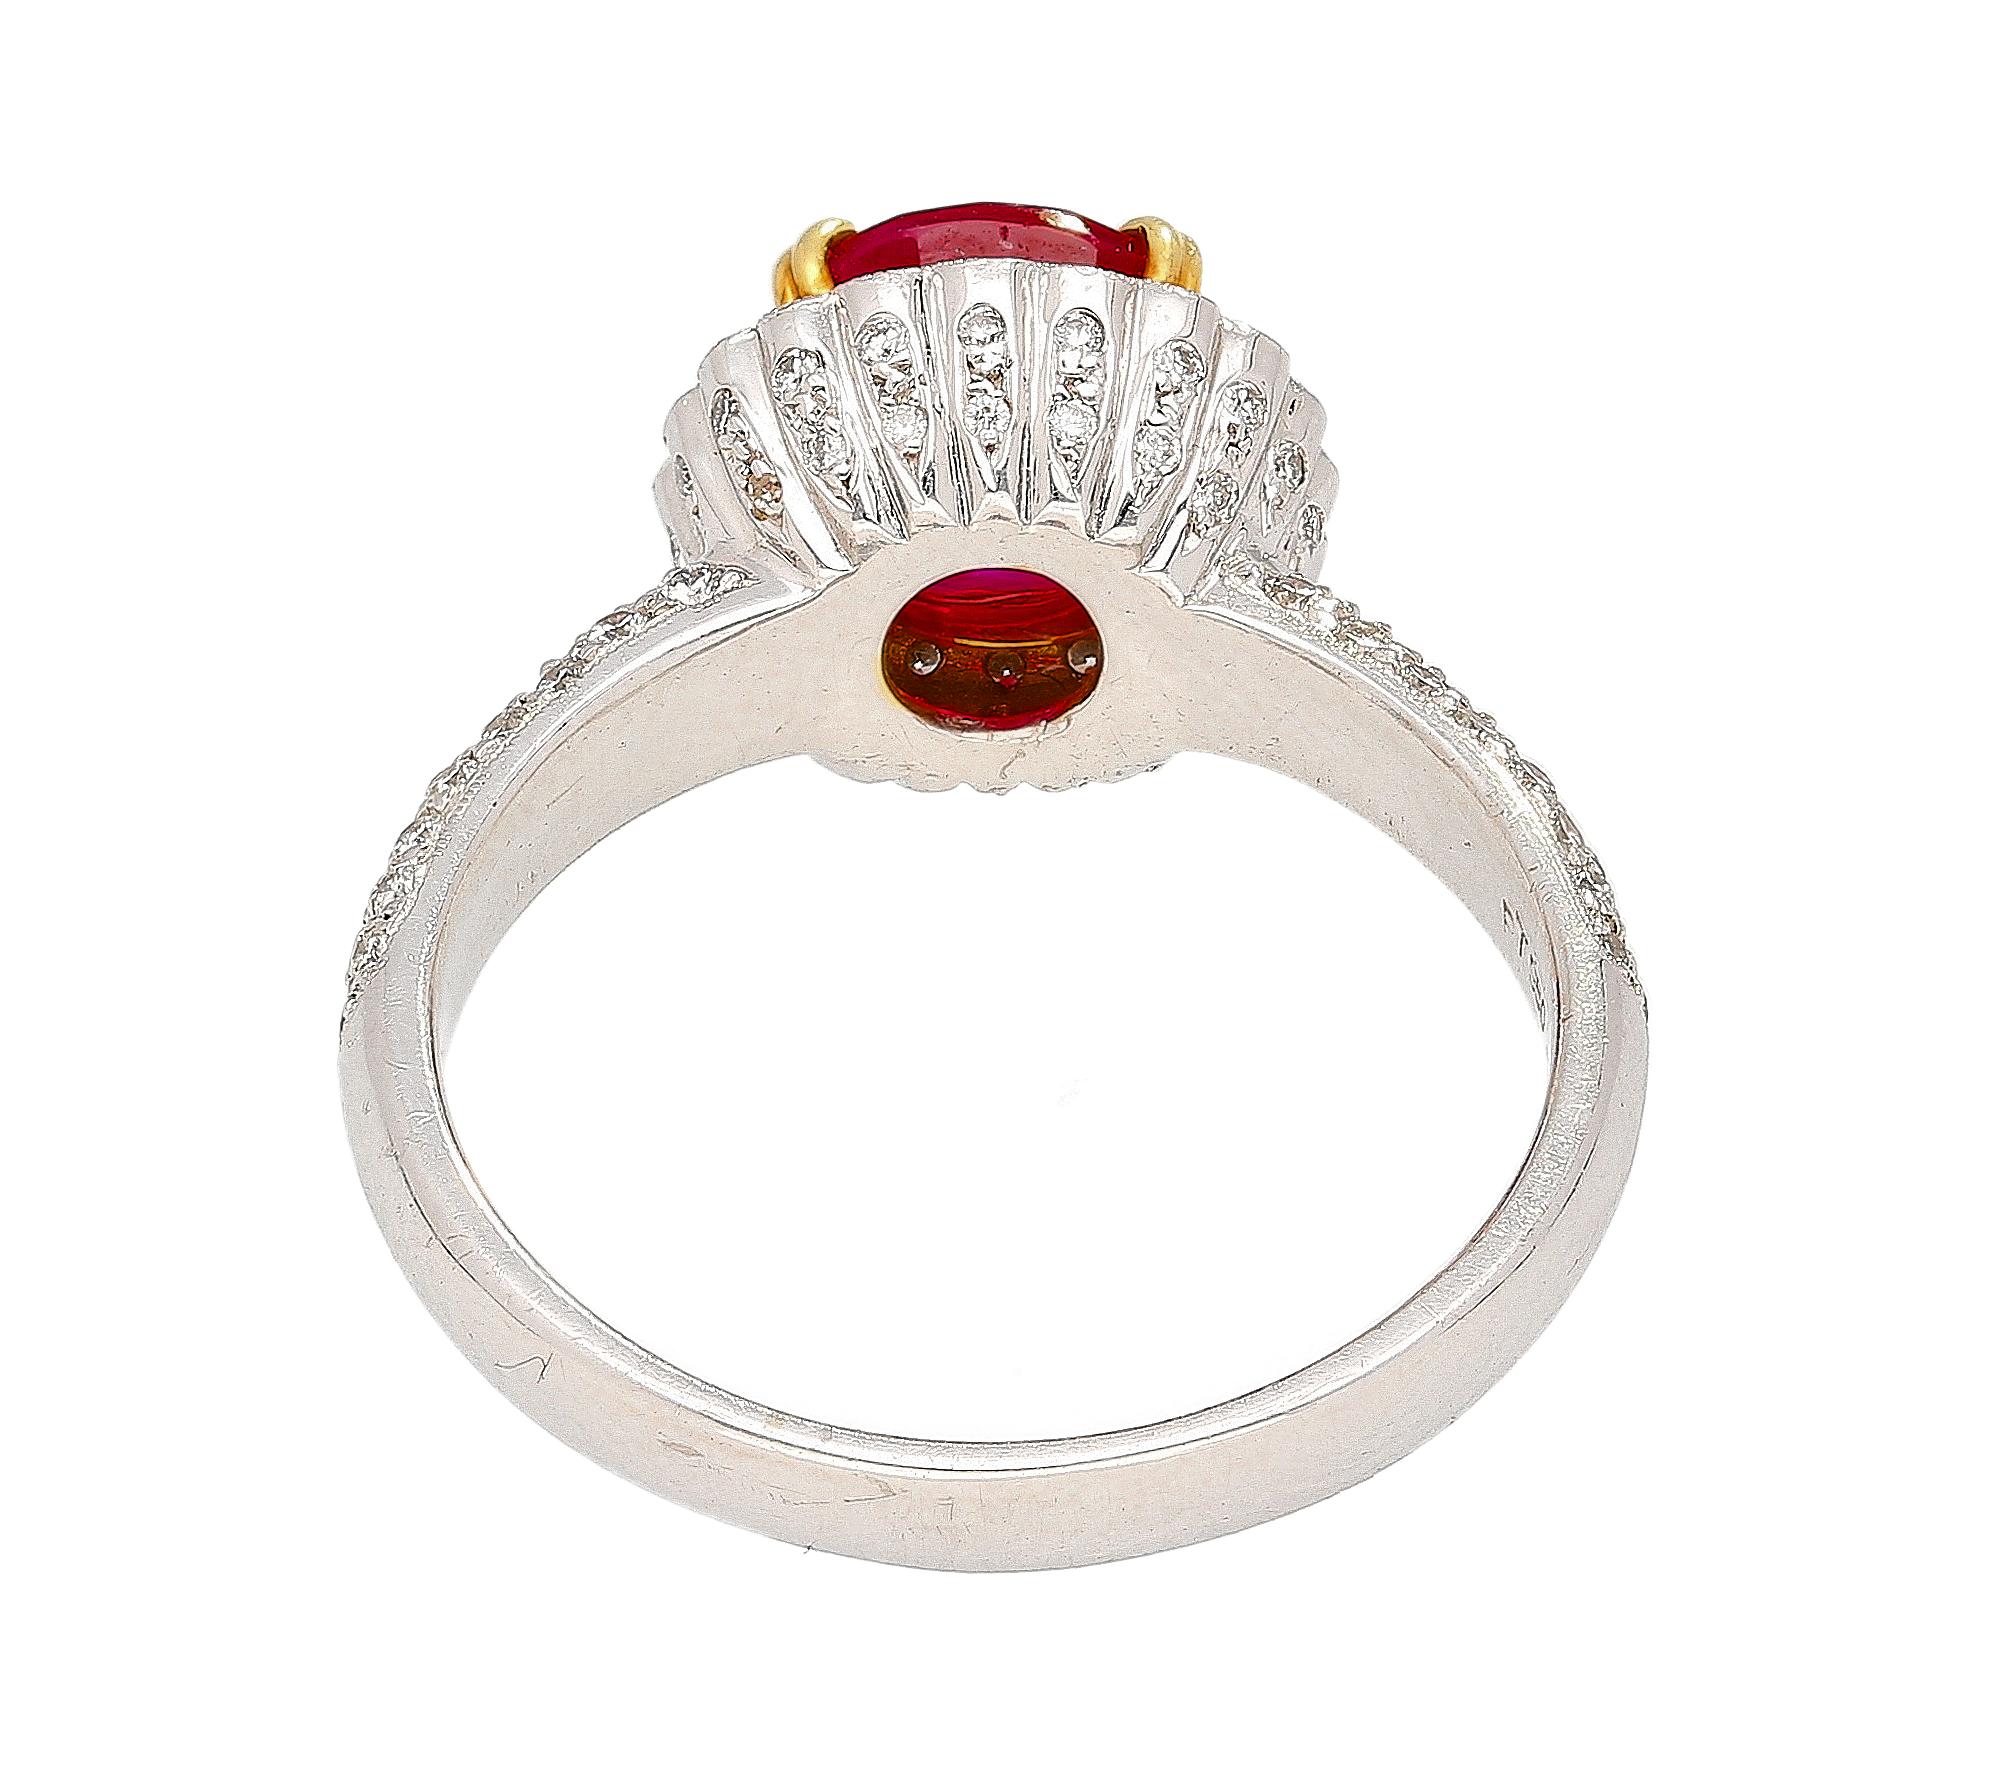 Modern 3.02 Carat Cushion Cut Burma Ruby & Round Diamond Ring in Platinum & 18K Gold For Sale